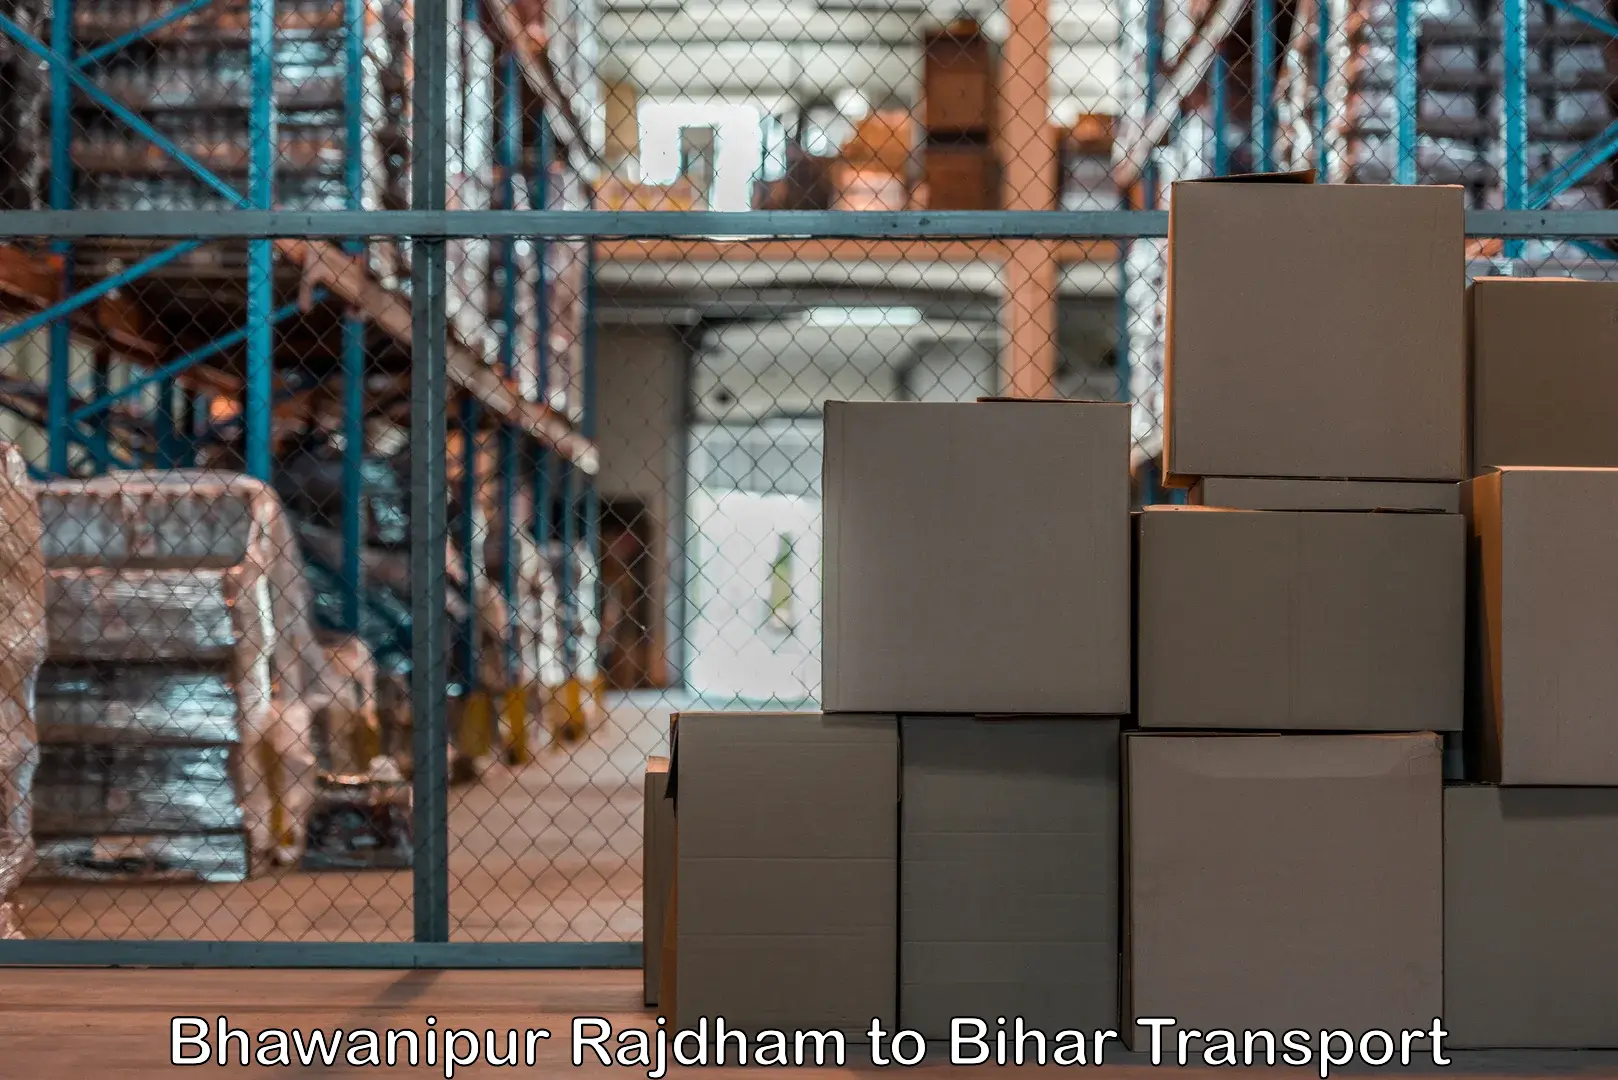 Truck transport companies in India Bhawanipur Rajdham to Sheohar